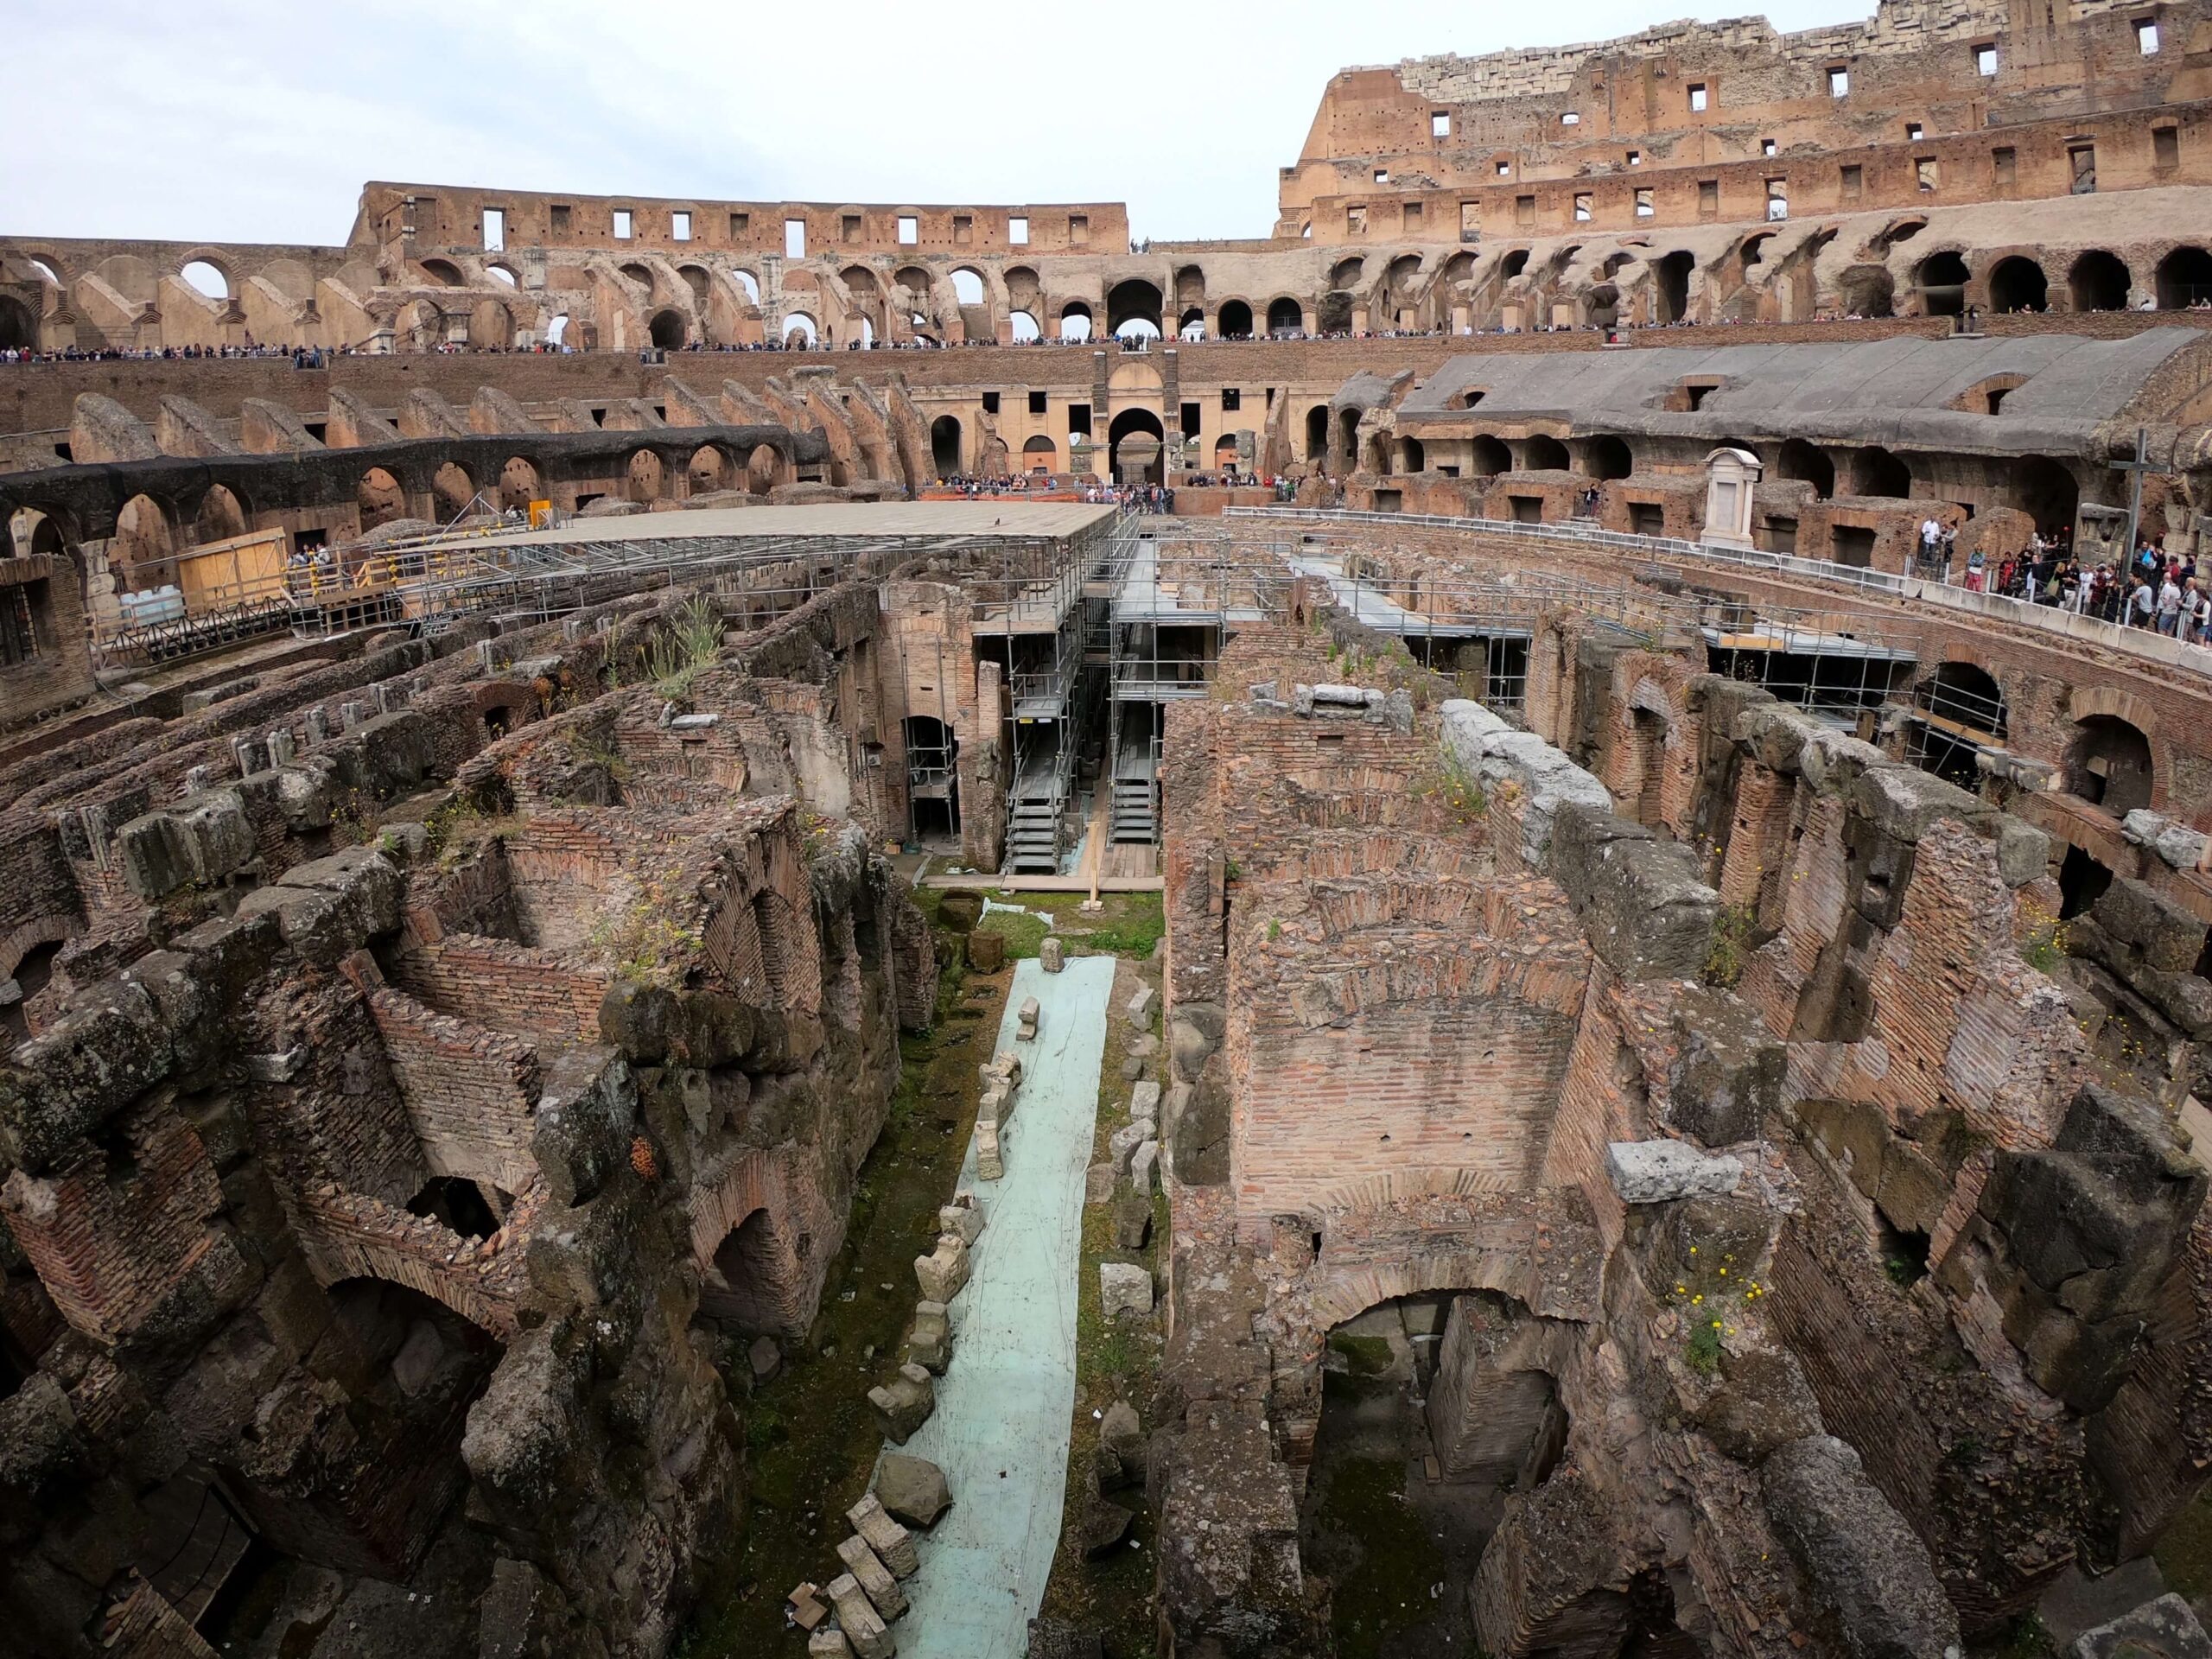 The Colosseum's Hypogeum, Rome, Italy